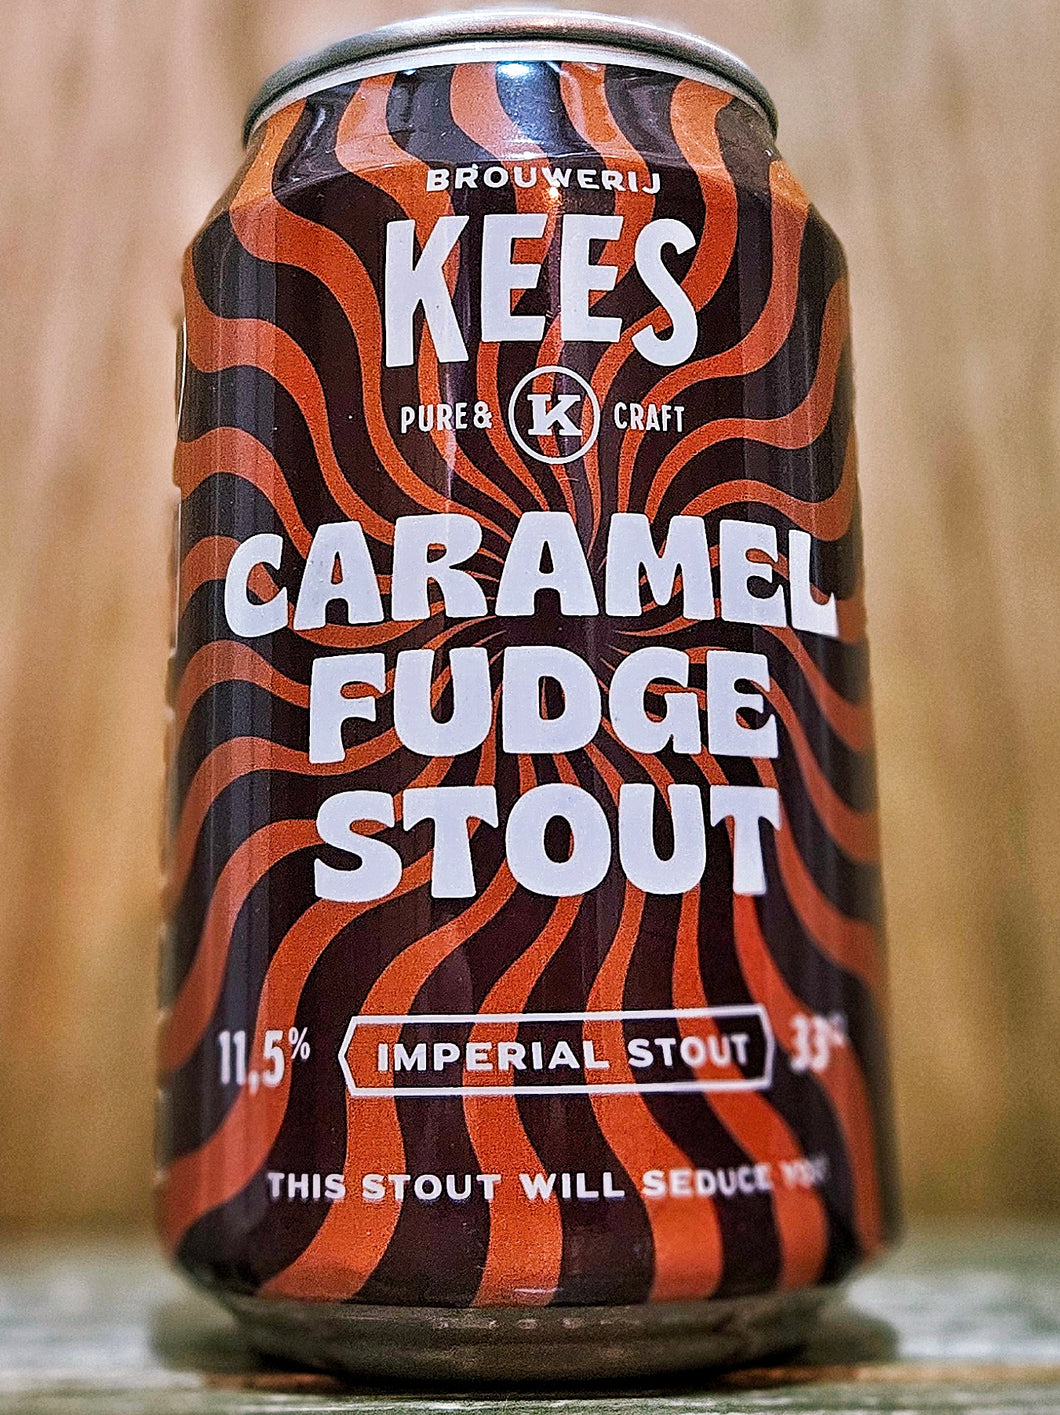 Kees - Caramel Fudge Stout